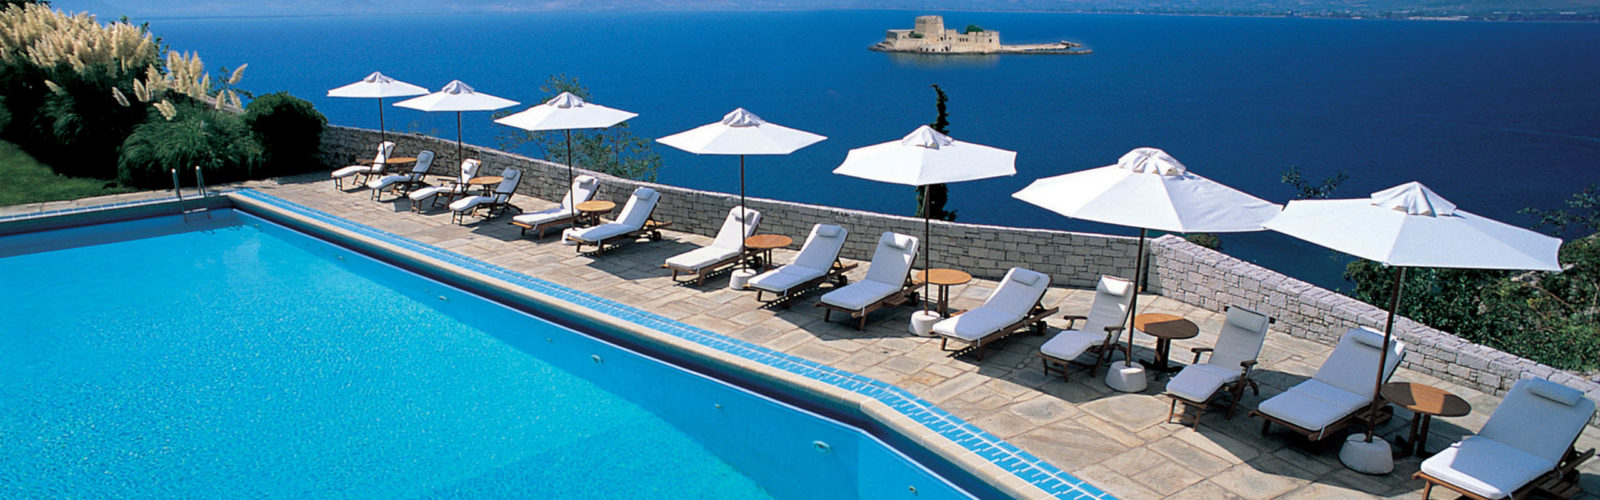 Pool, Nafplia Palace Hotel & Villas, Nafplio, Greece